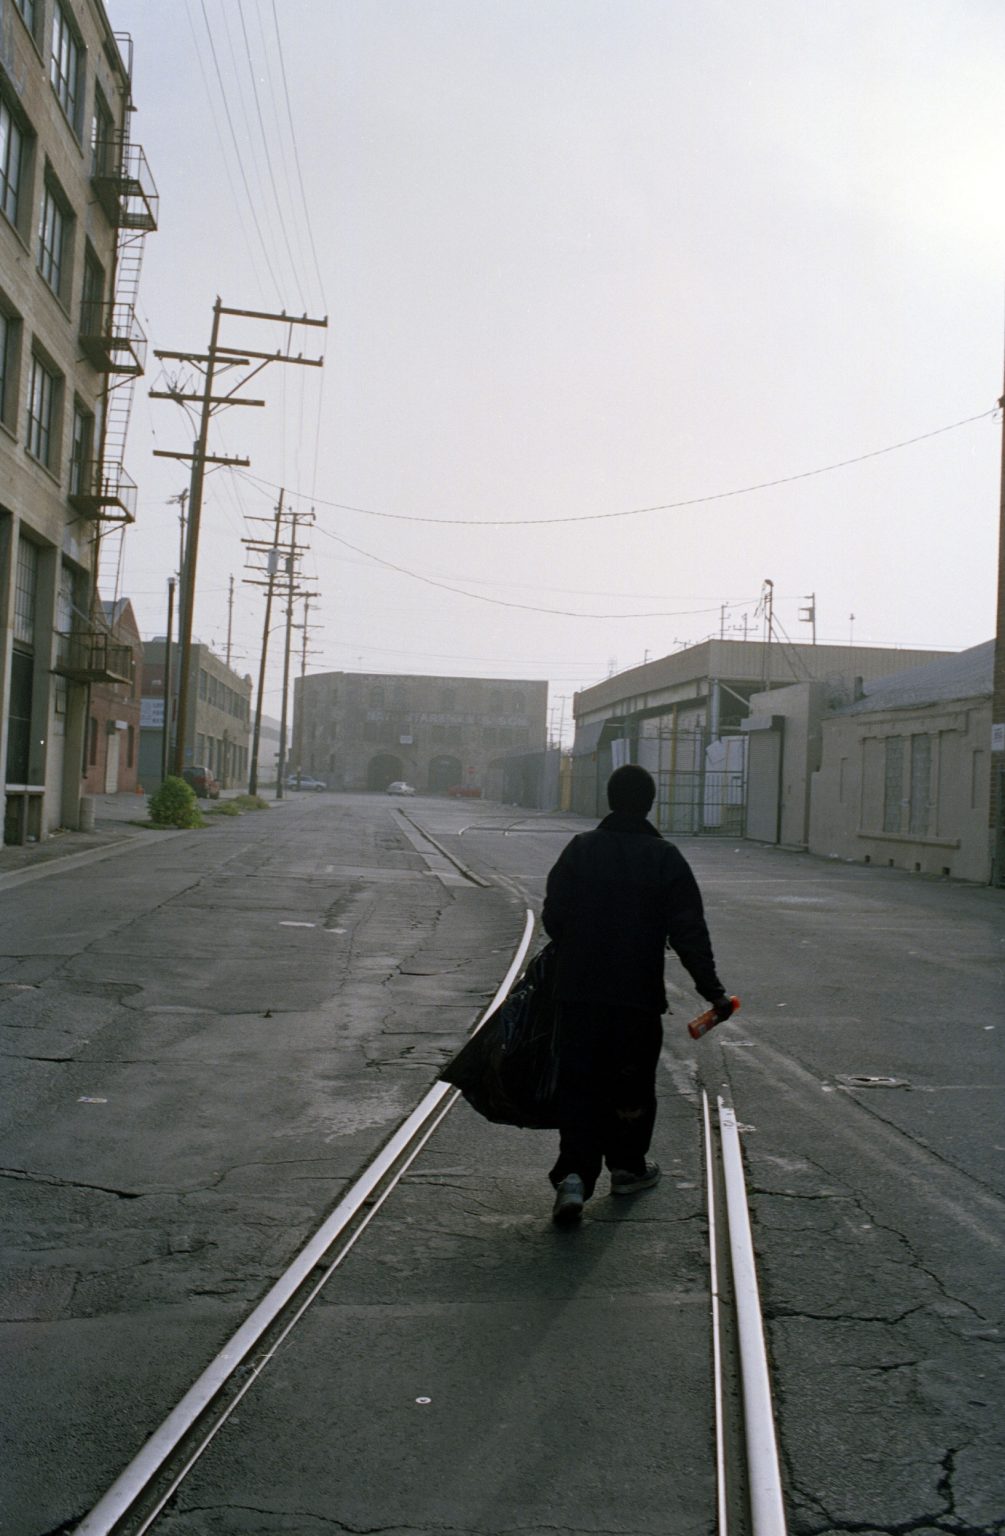 Los Angeles 2004 - Skid Row  - Curson Avenue - Homeless  *** Local Caption *** 00216507